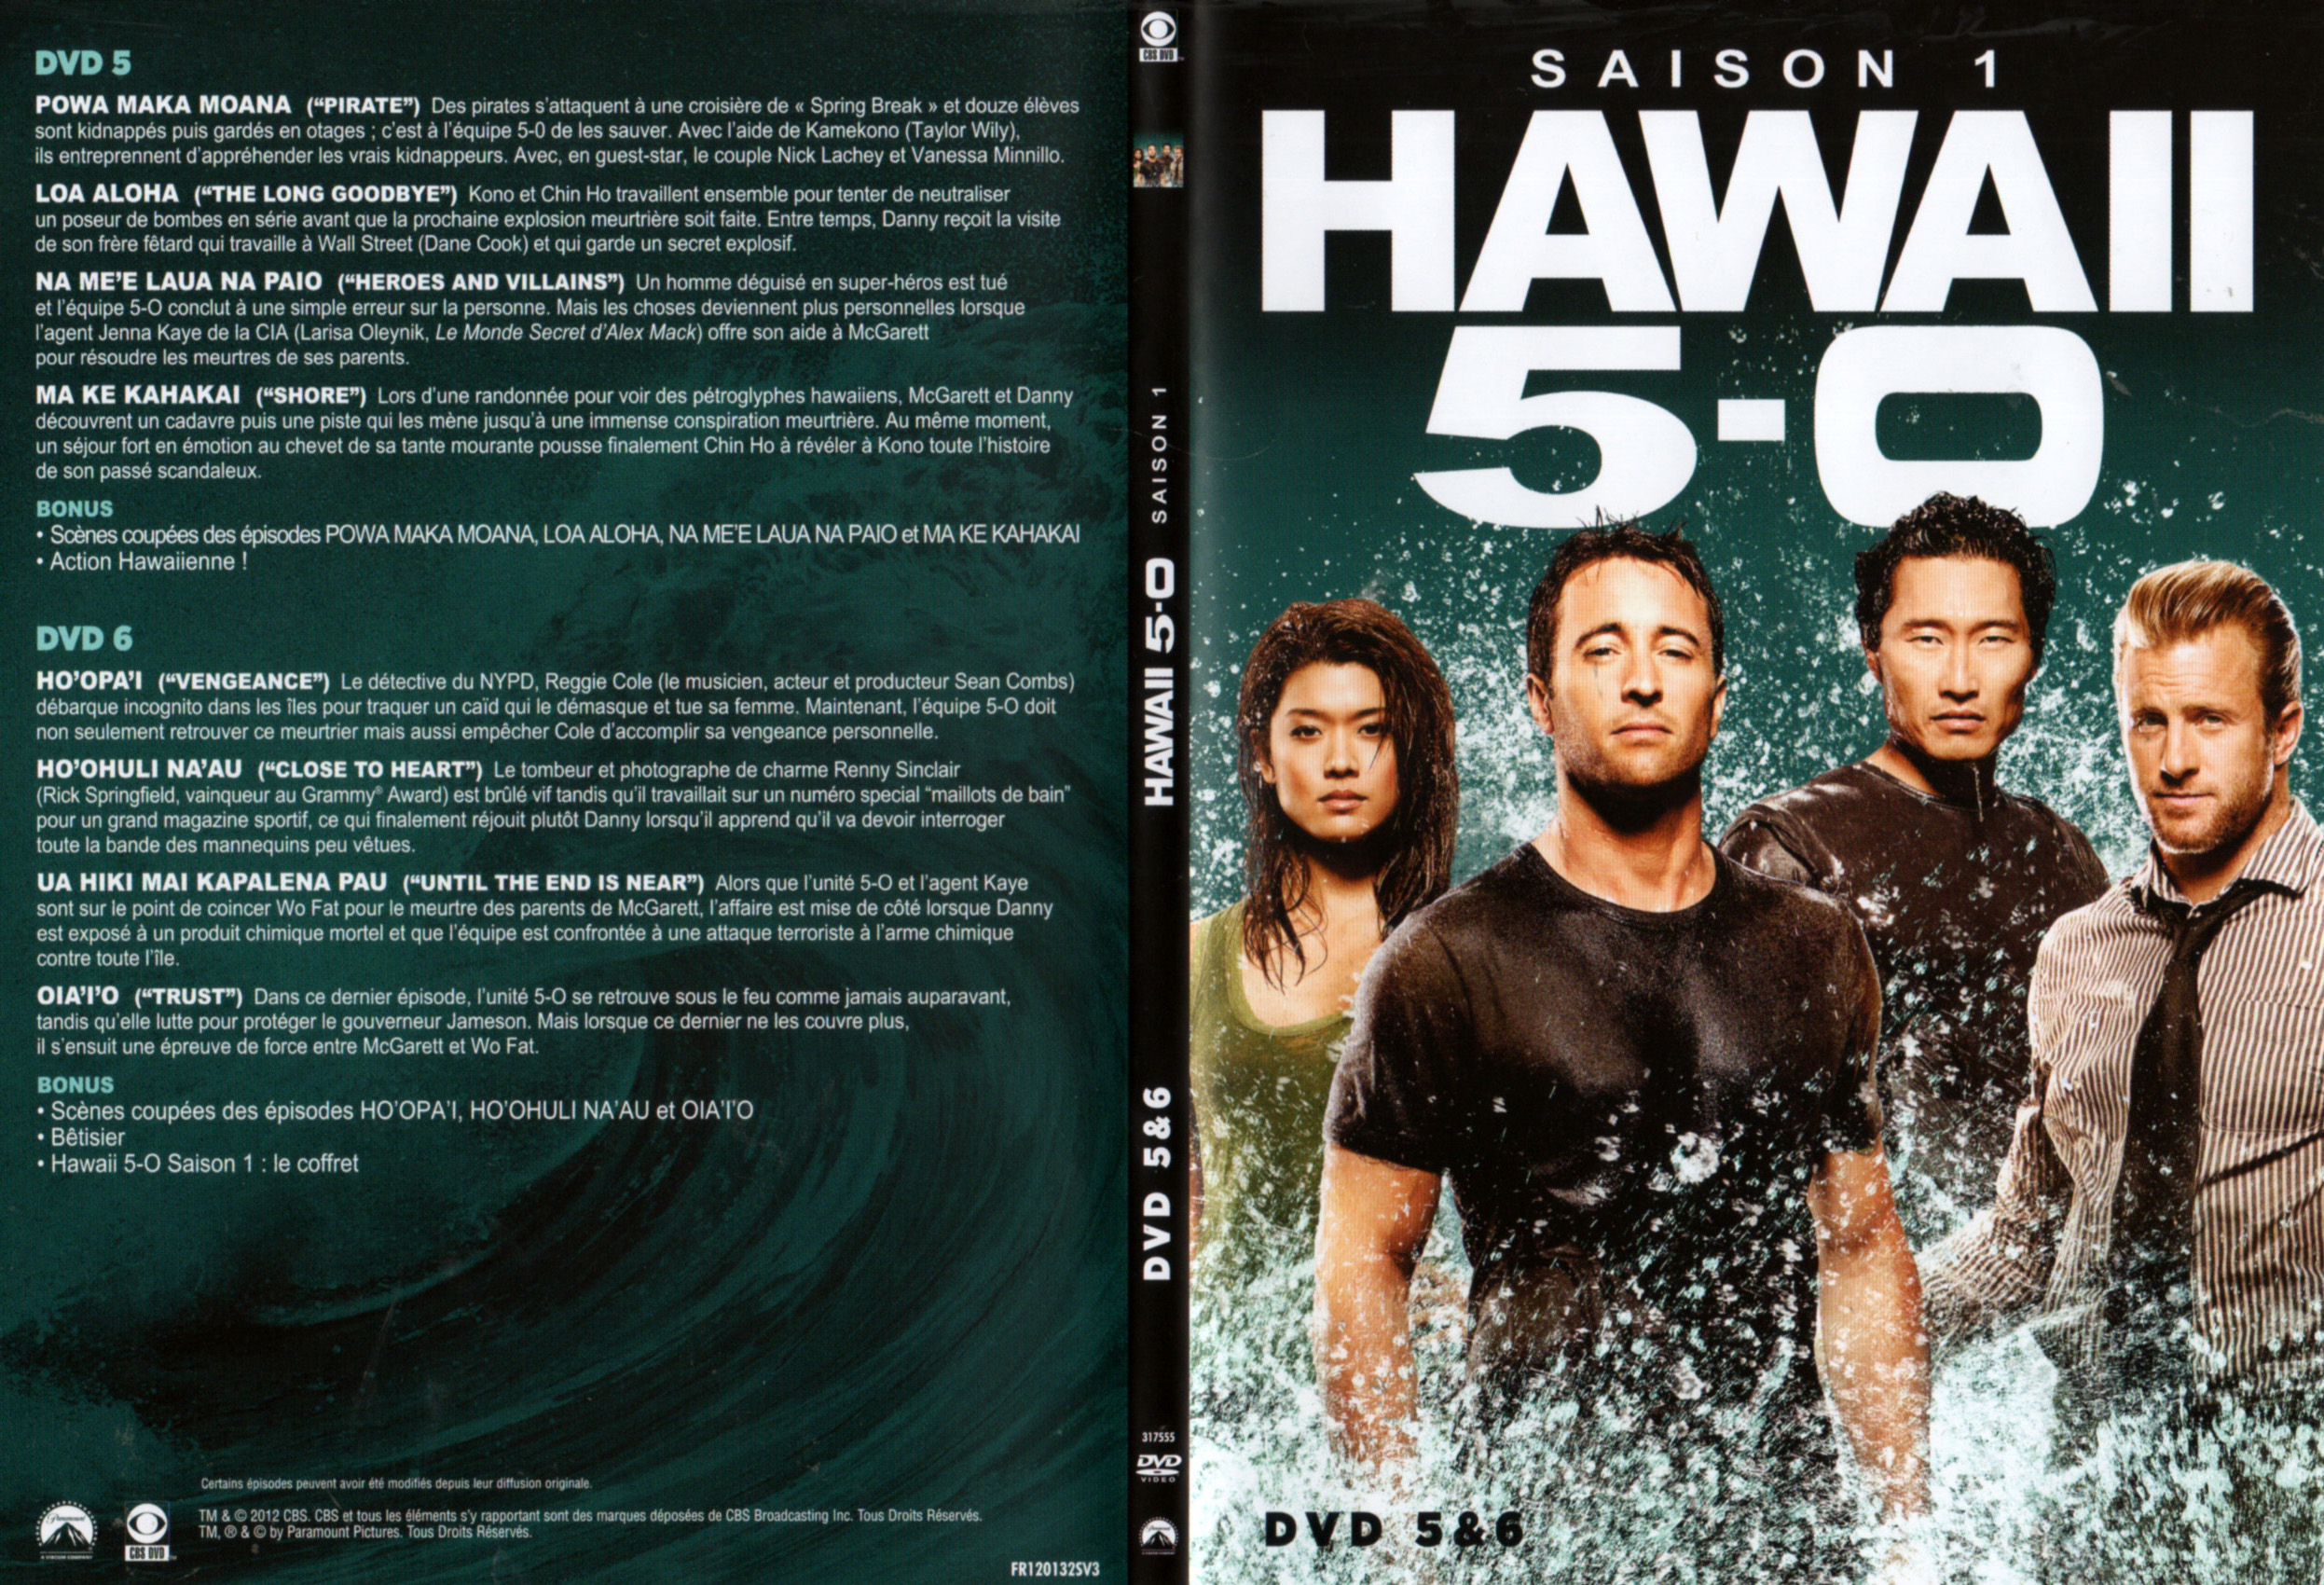 Jaquette DVD Hawaii Five-O Saison 1 DISC 3